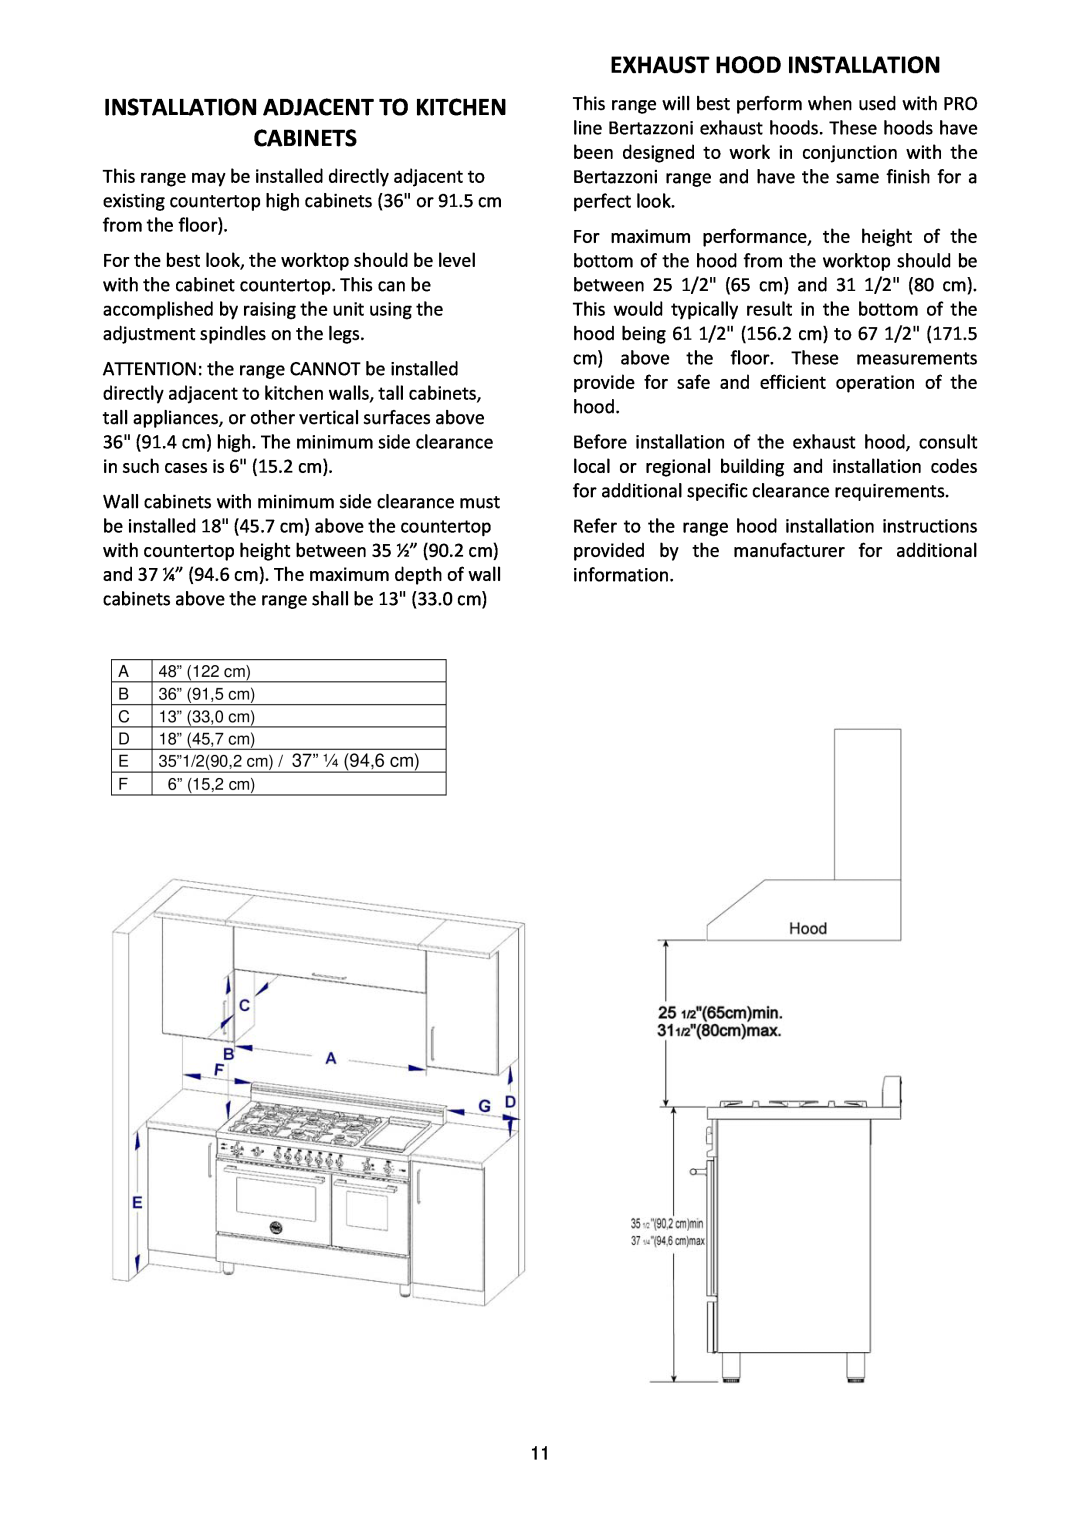 Bertazzoni MAS486GGASXTLP dimensions Installation Adjacent To Kitchen Cabinets, Exhaust Hood Installation 